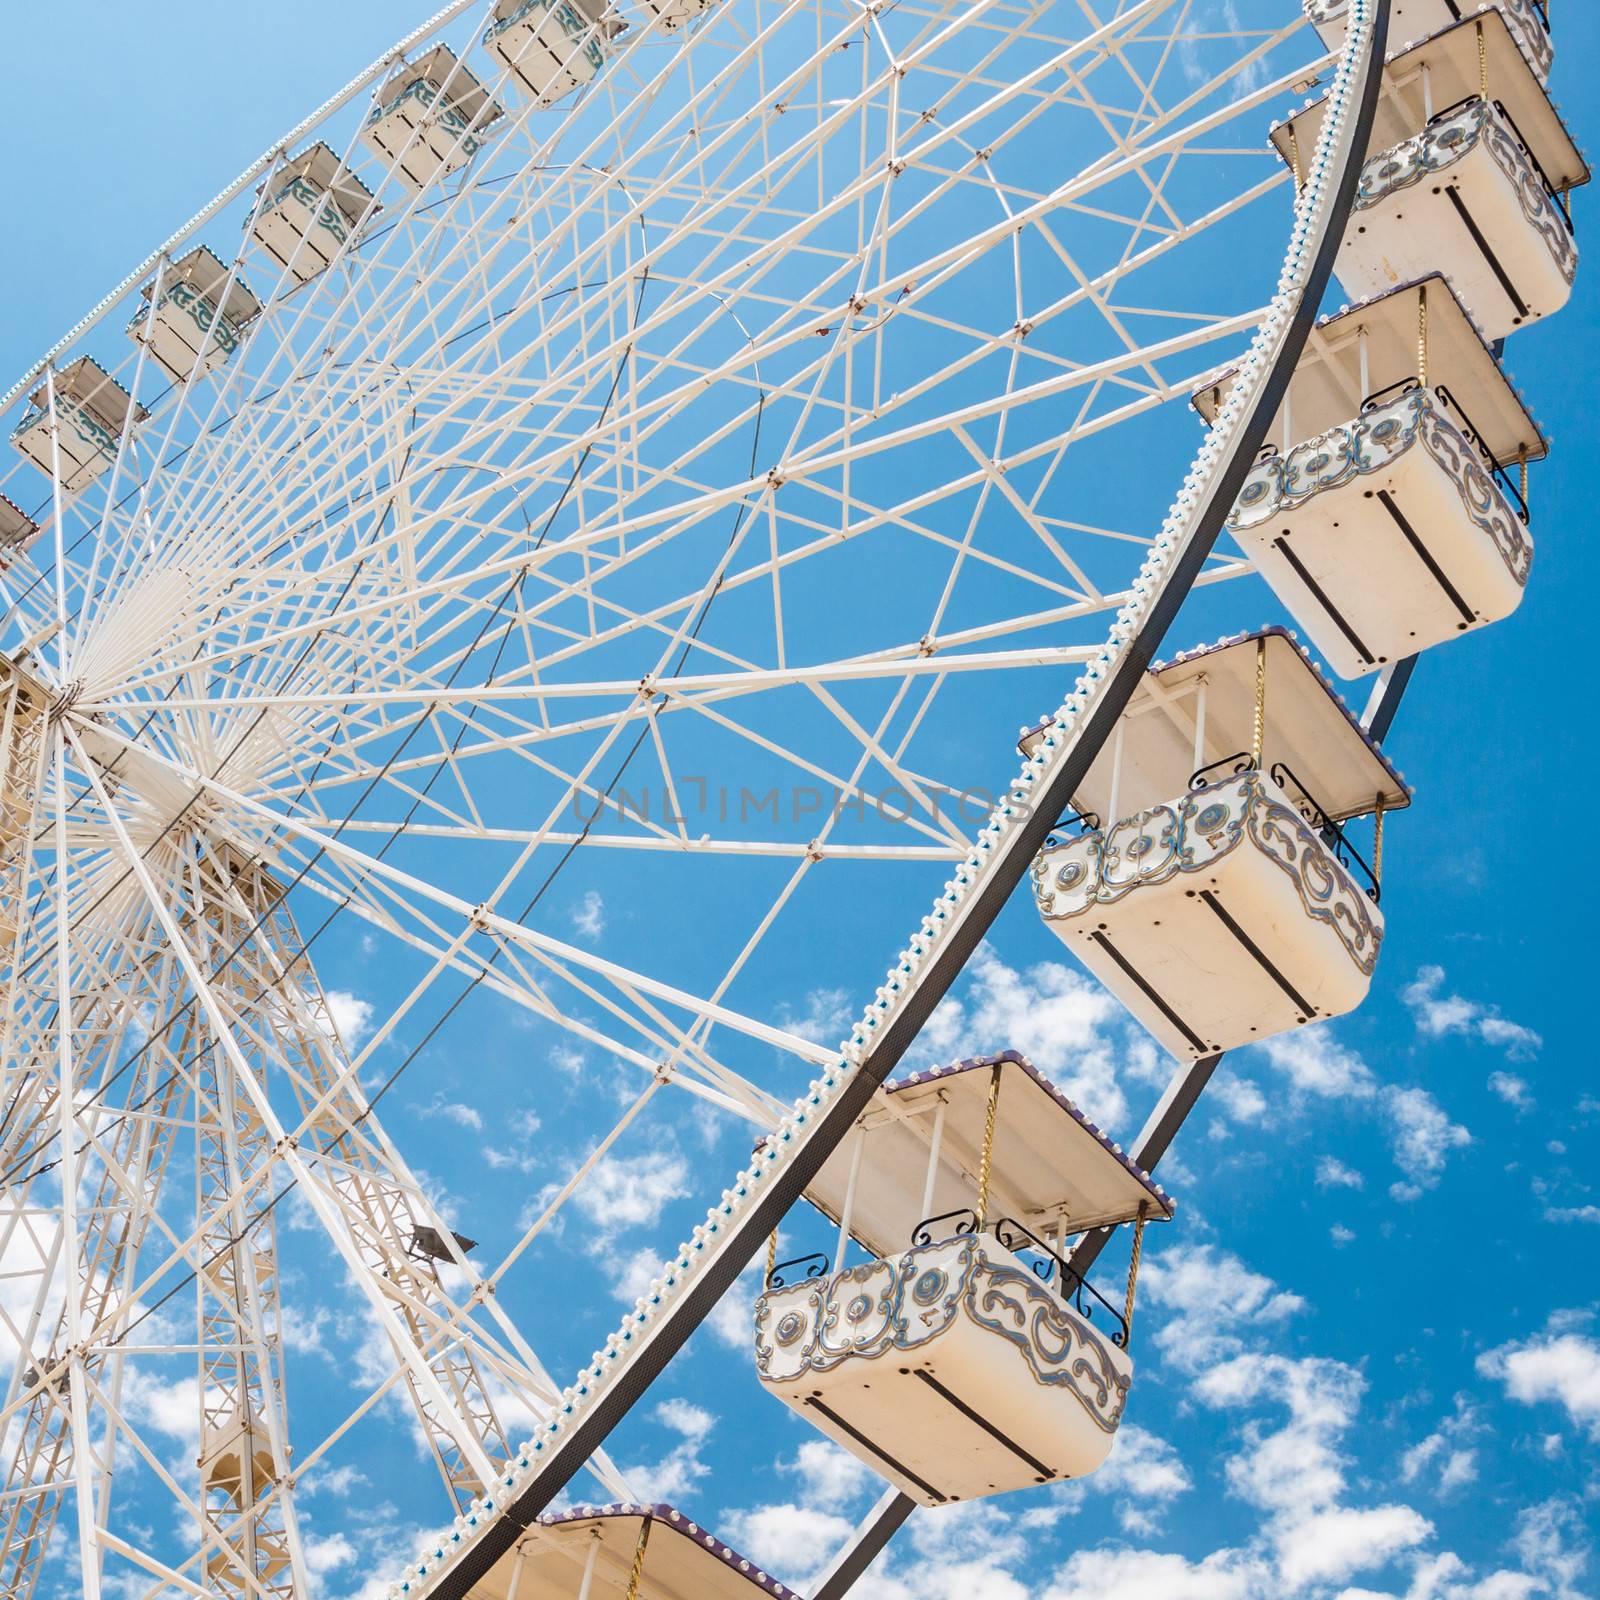 Ferris wheel of fair and amusement park  by kasto